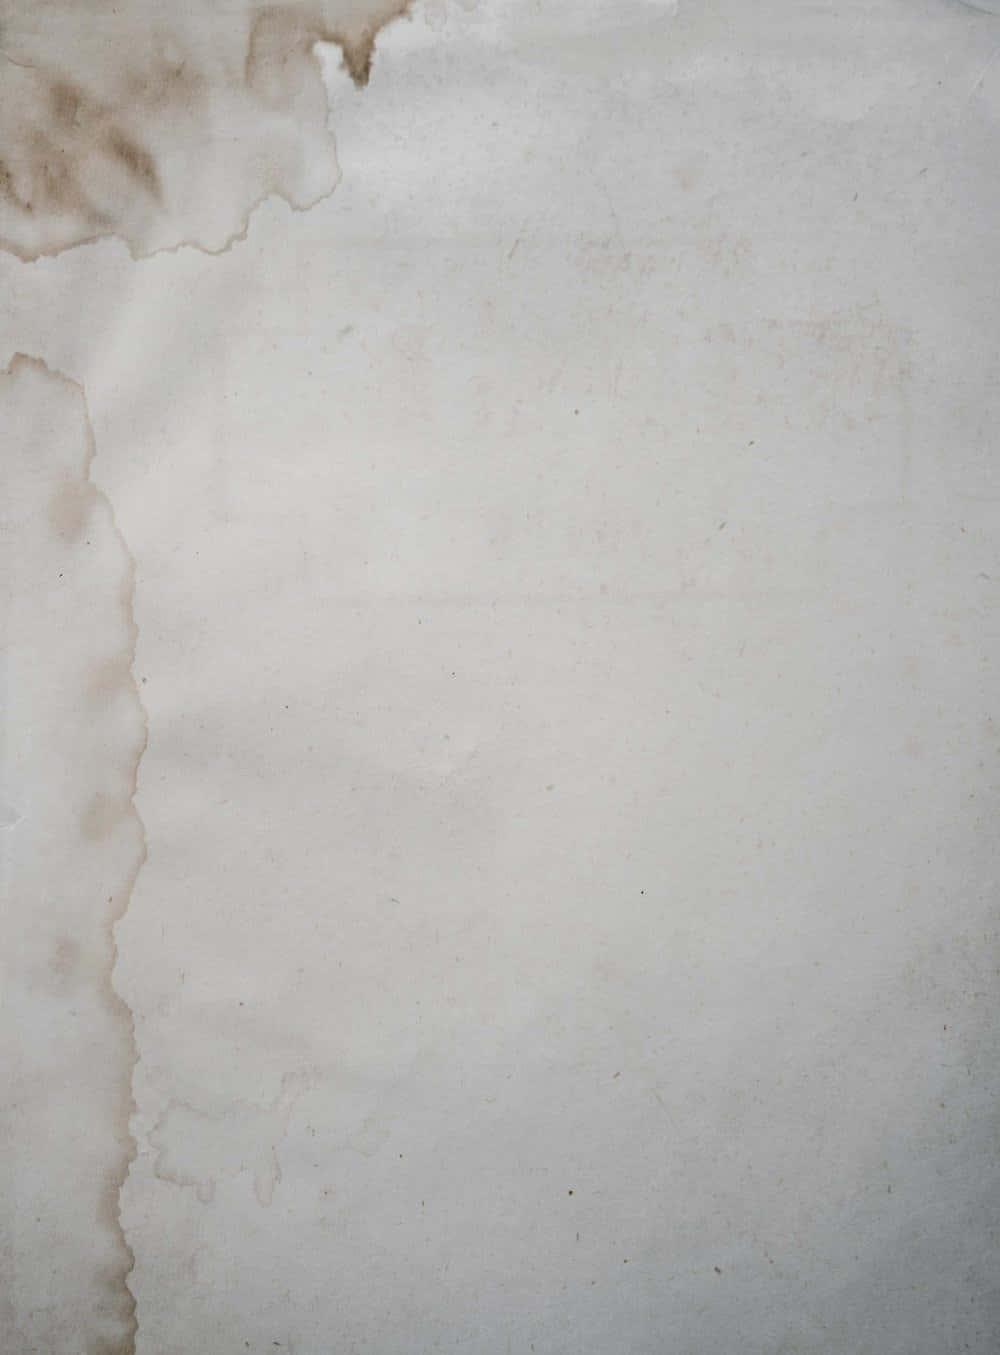 Parchment Paper Background Light Gray Background